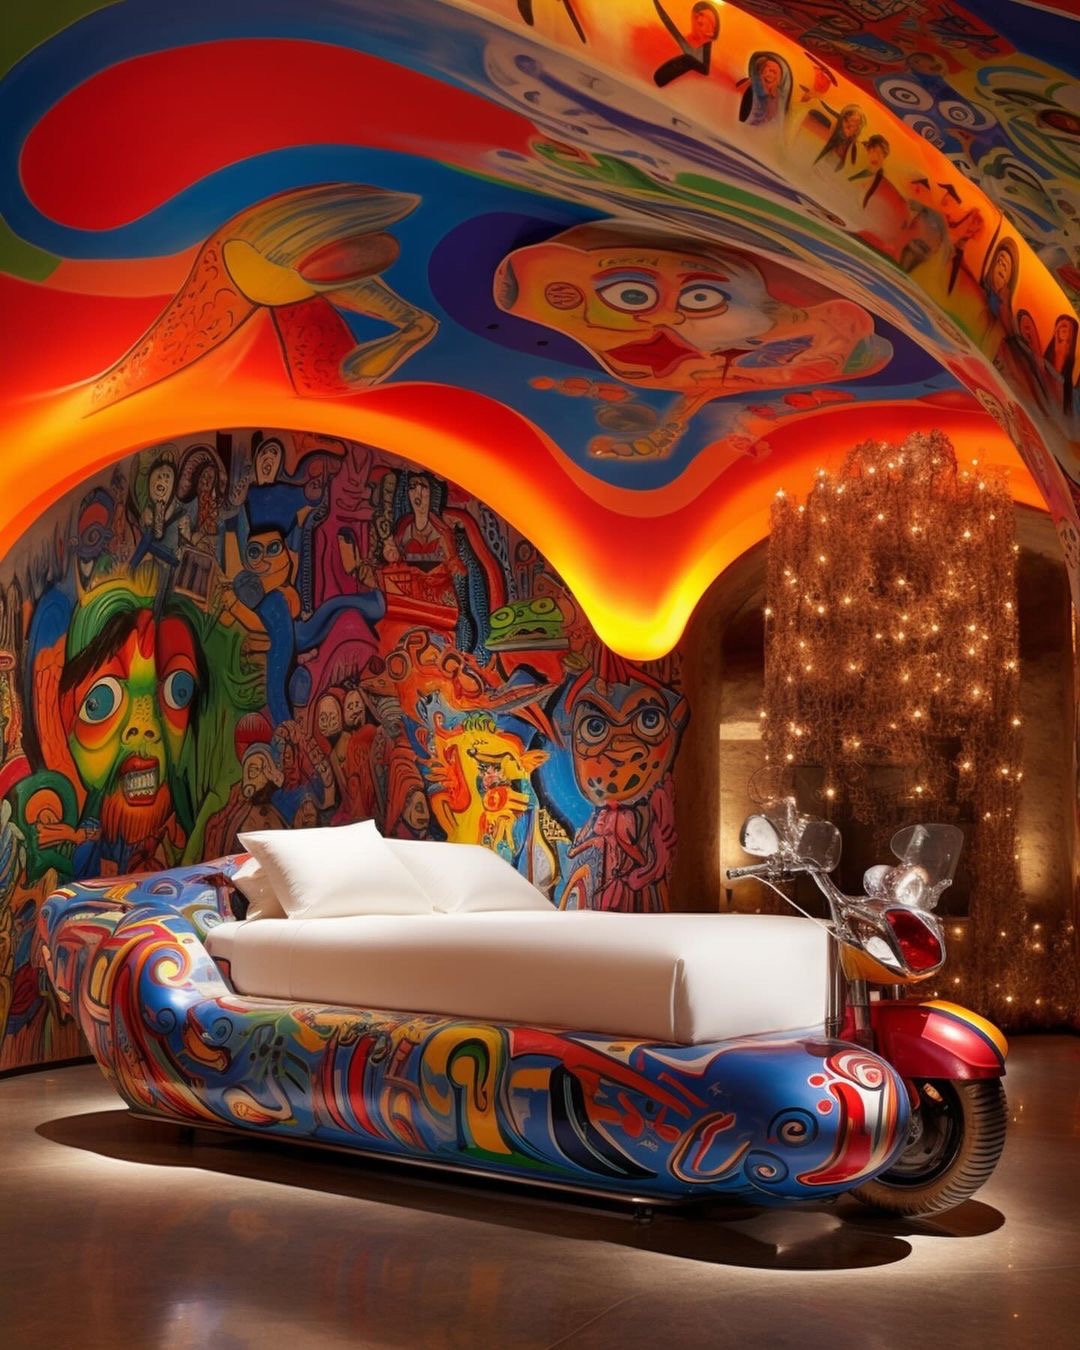 Eclectic Art in Your Modern Dream Home Bedroom